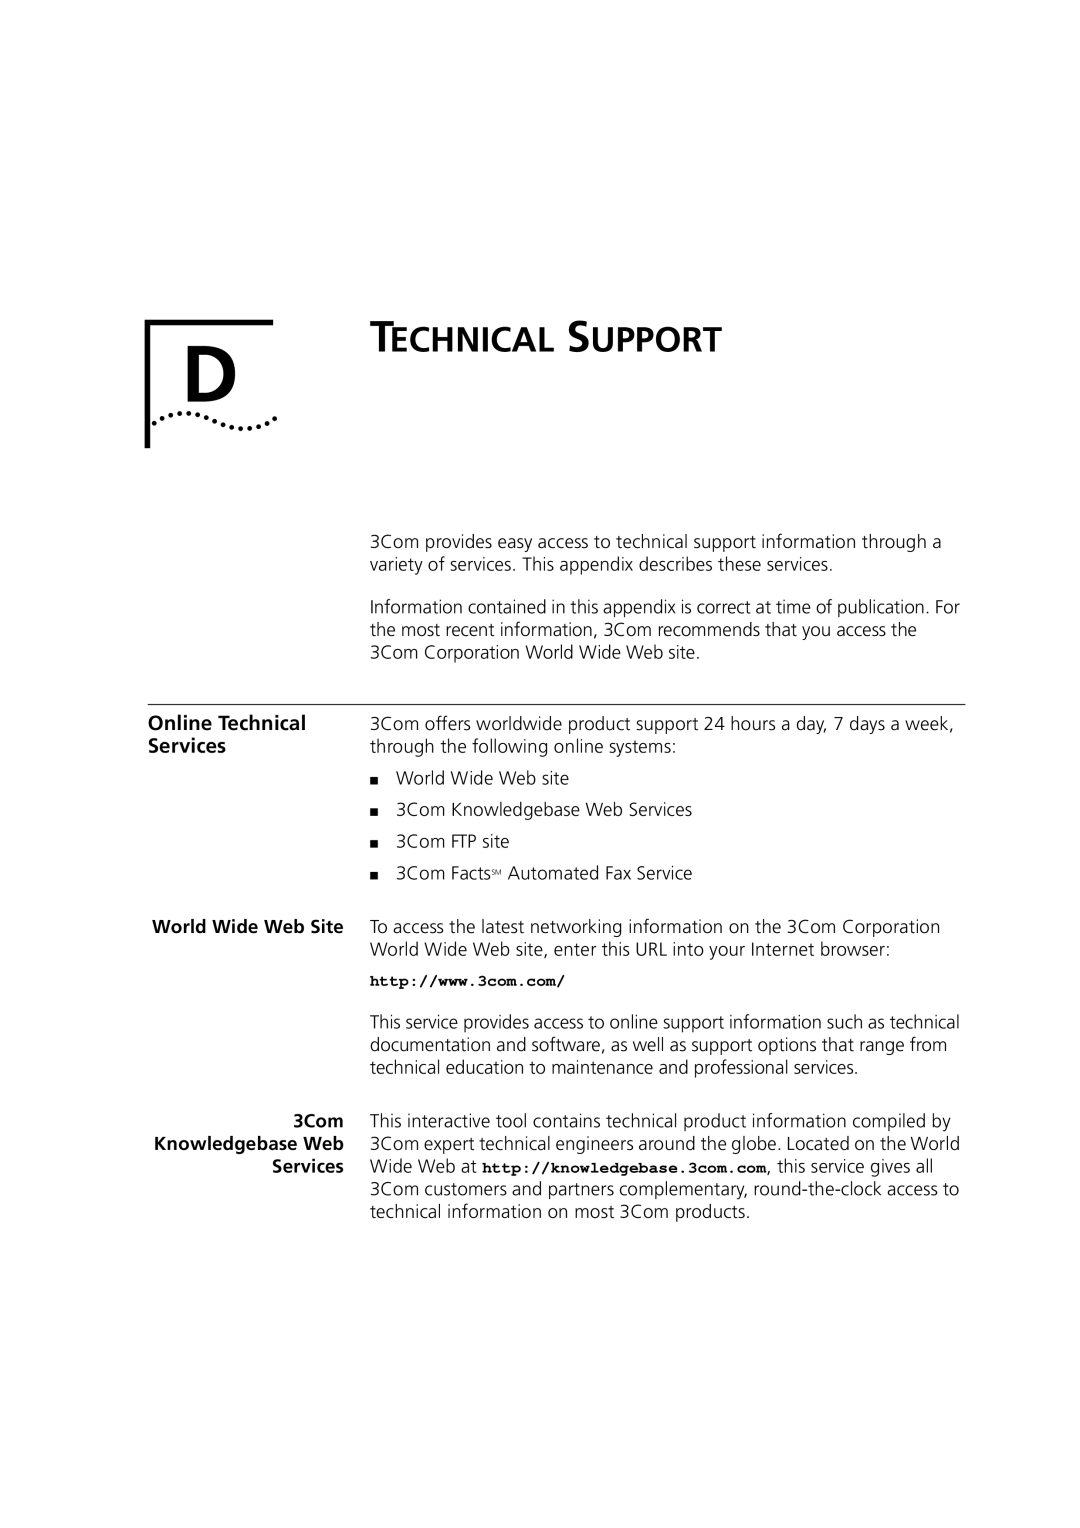 3Com 3C16987 manual Technical Support, Online Technical, Services, 3Com 